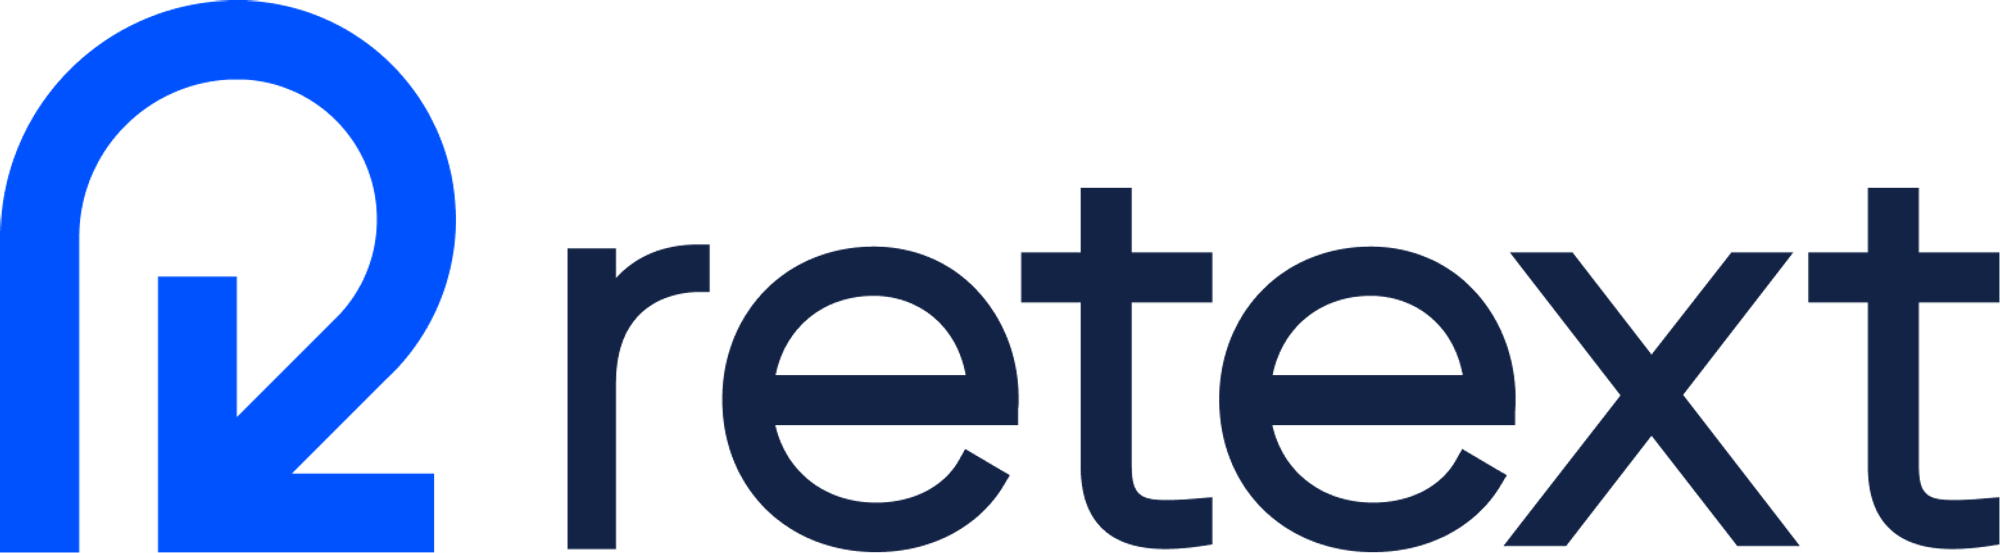 Modern logo design for retext.io